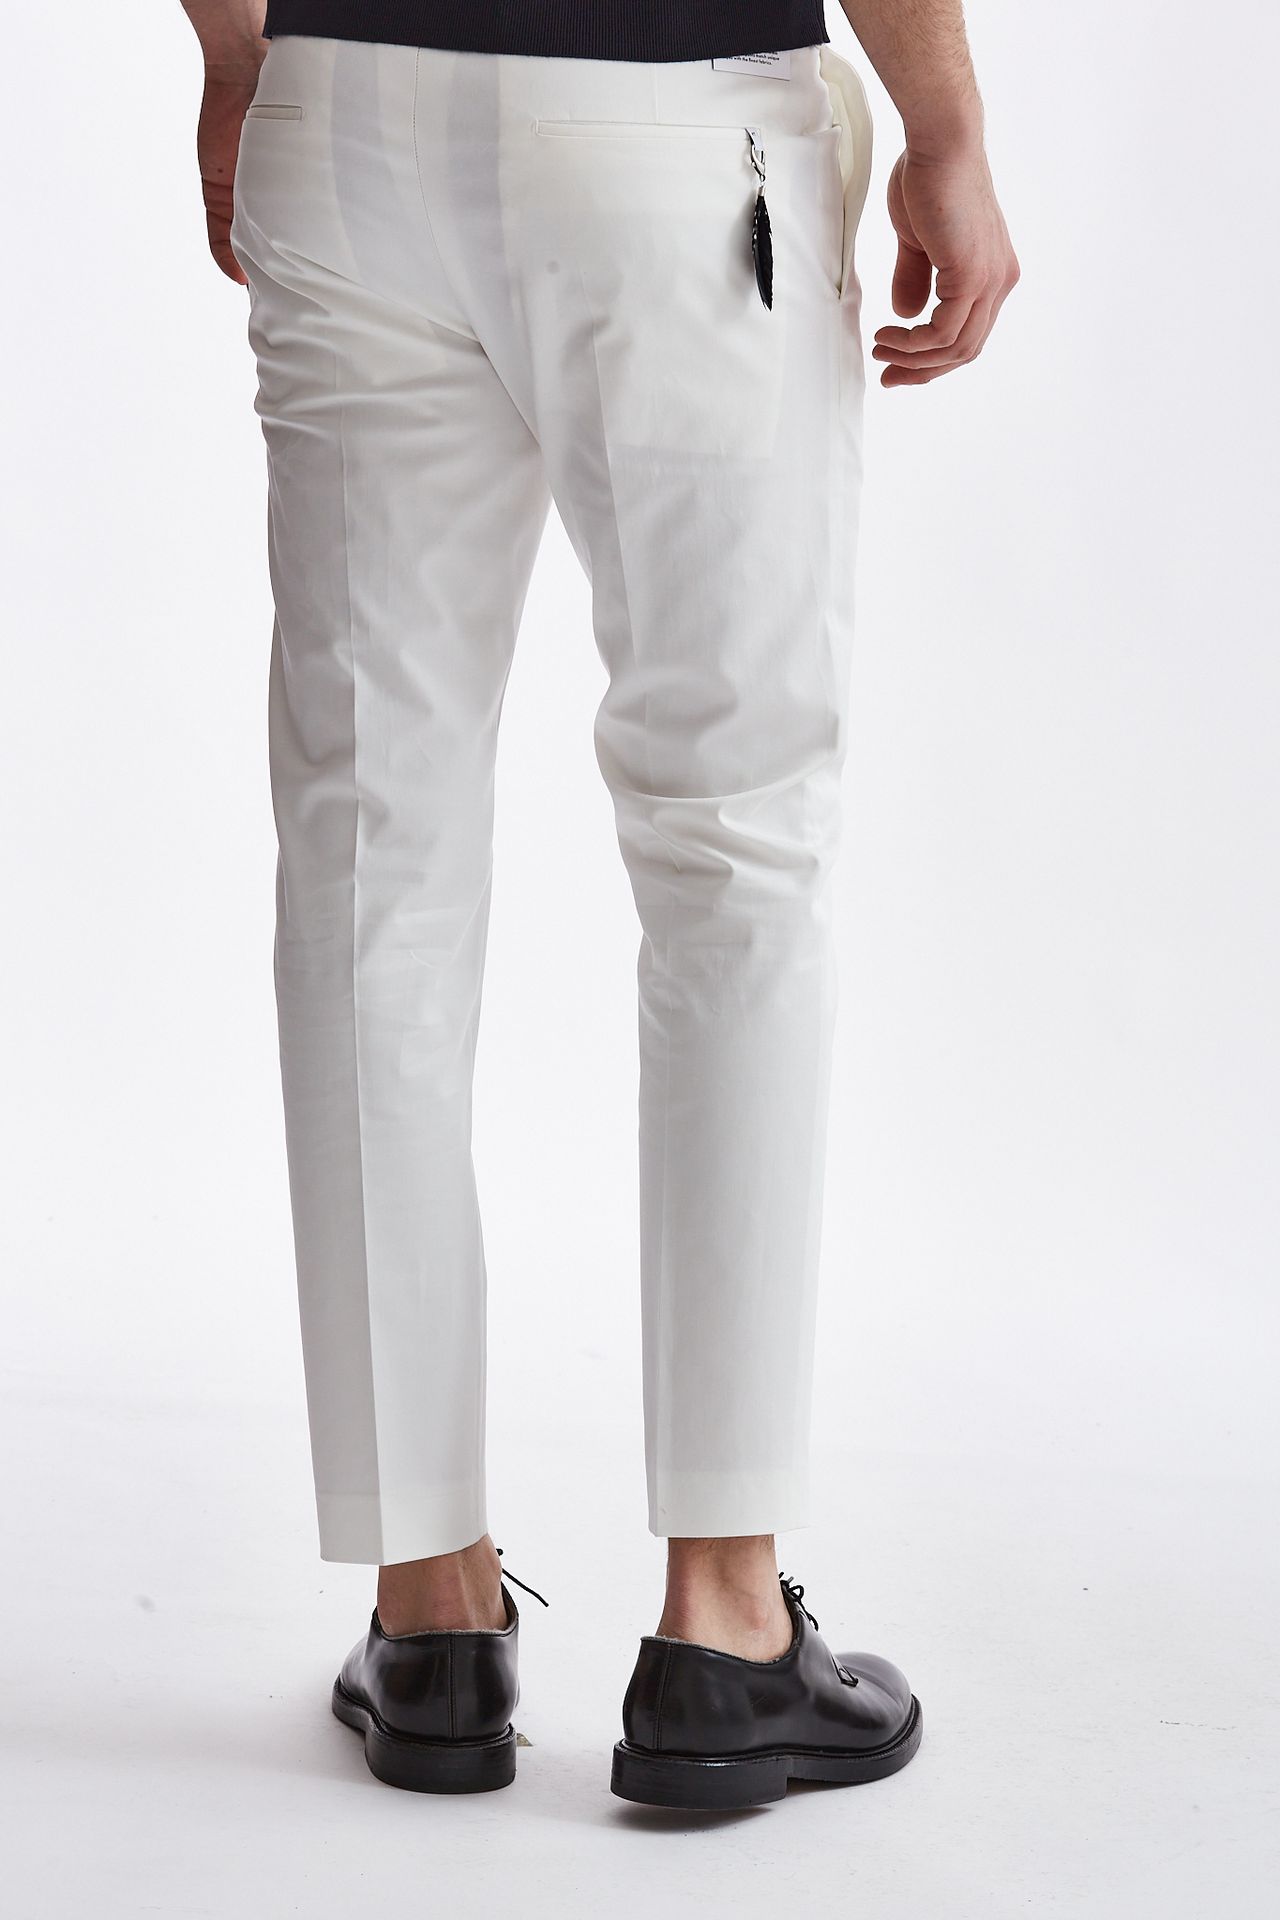 Pantalone EDGE-DIECI bianco 